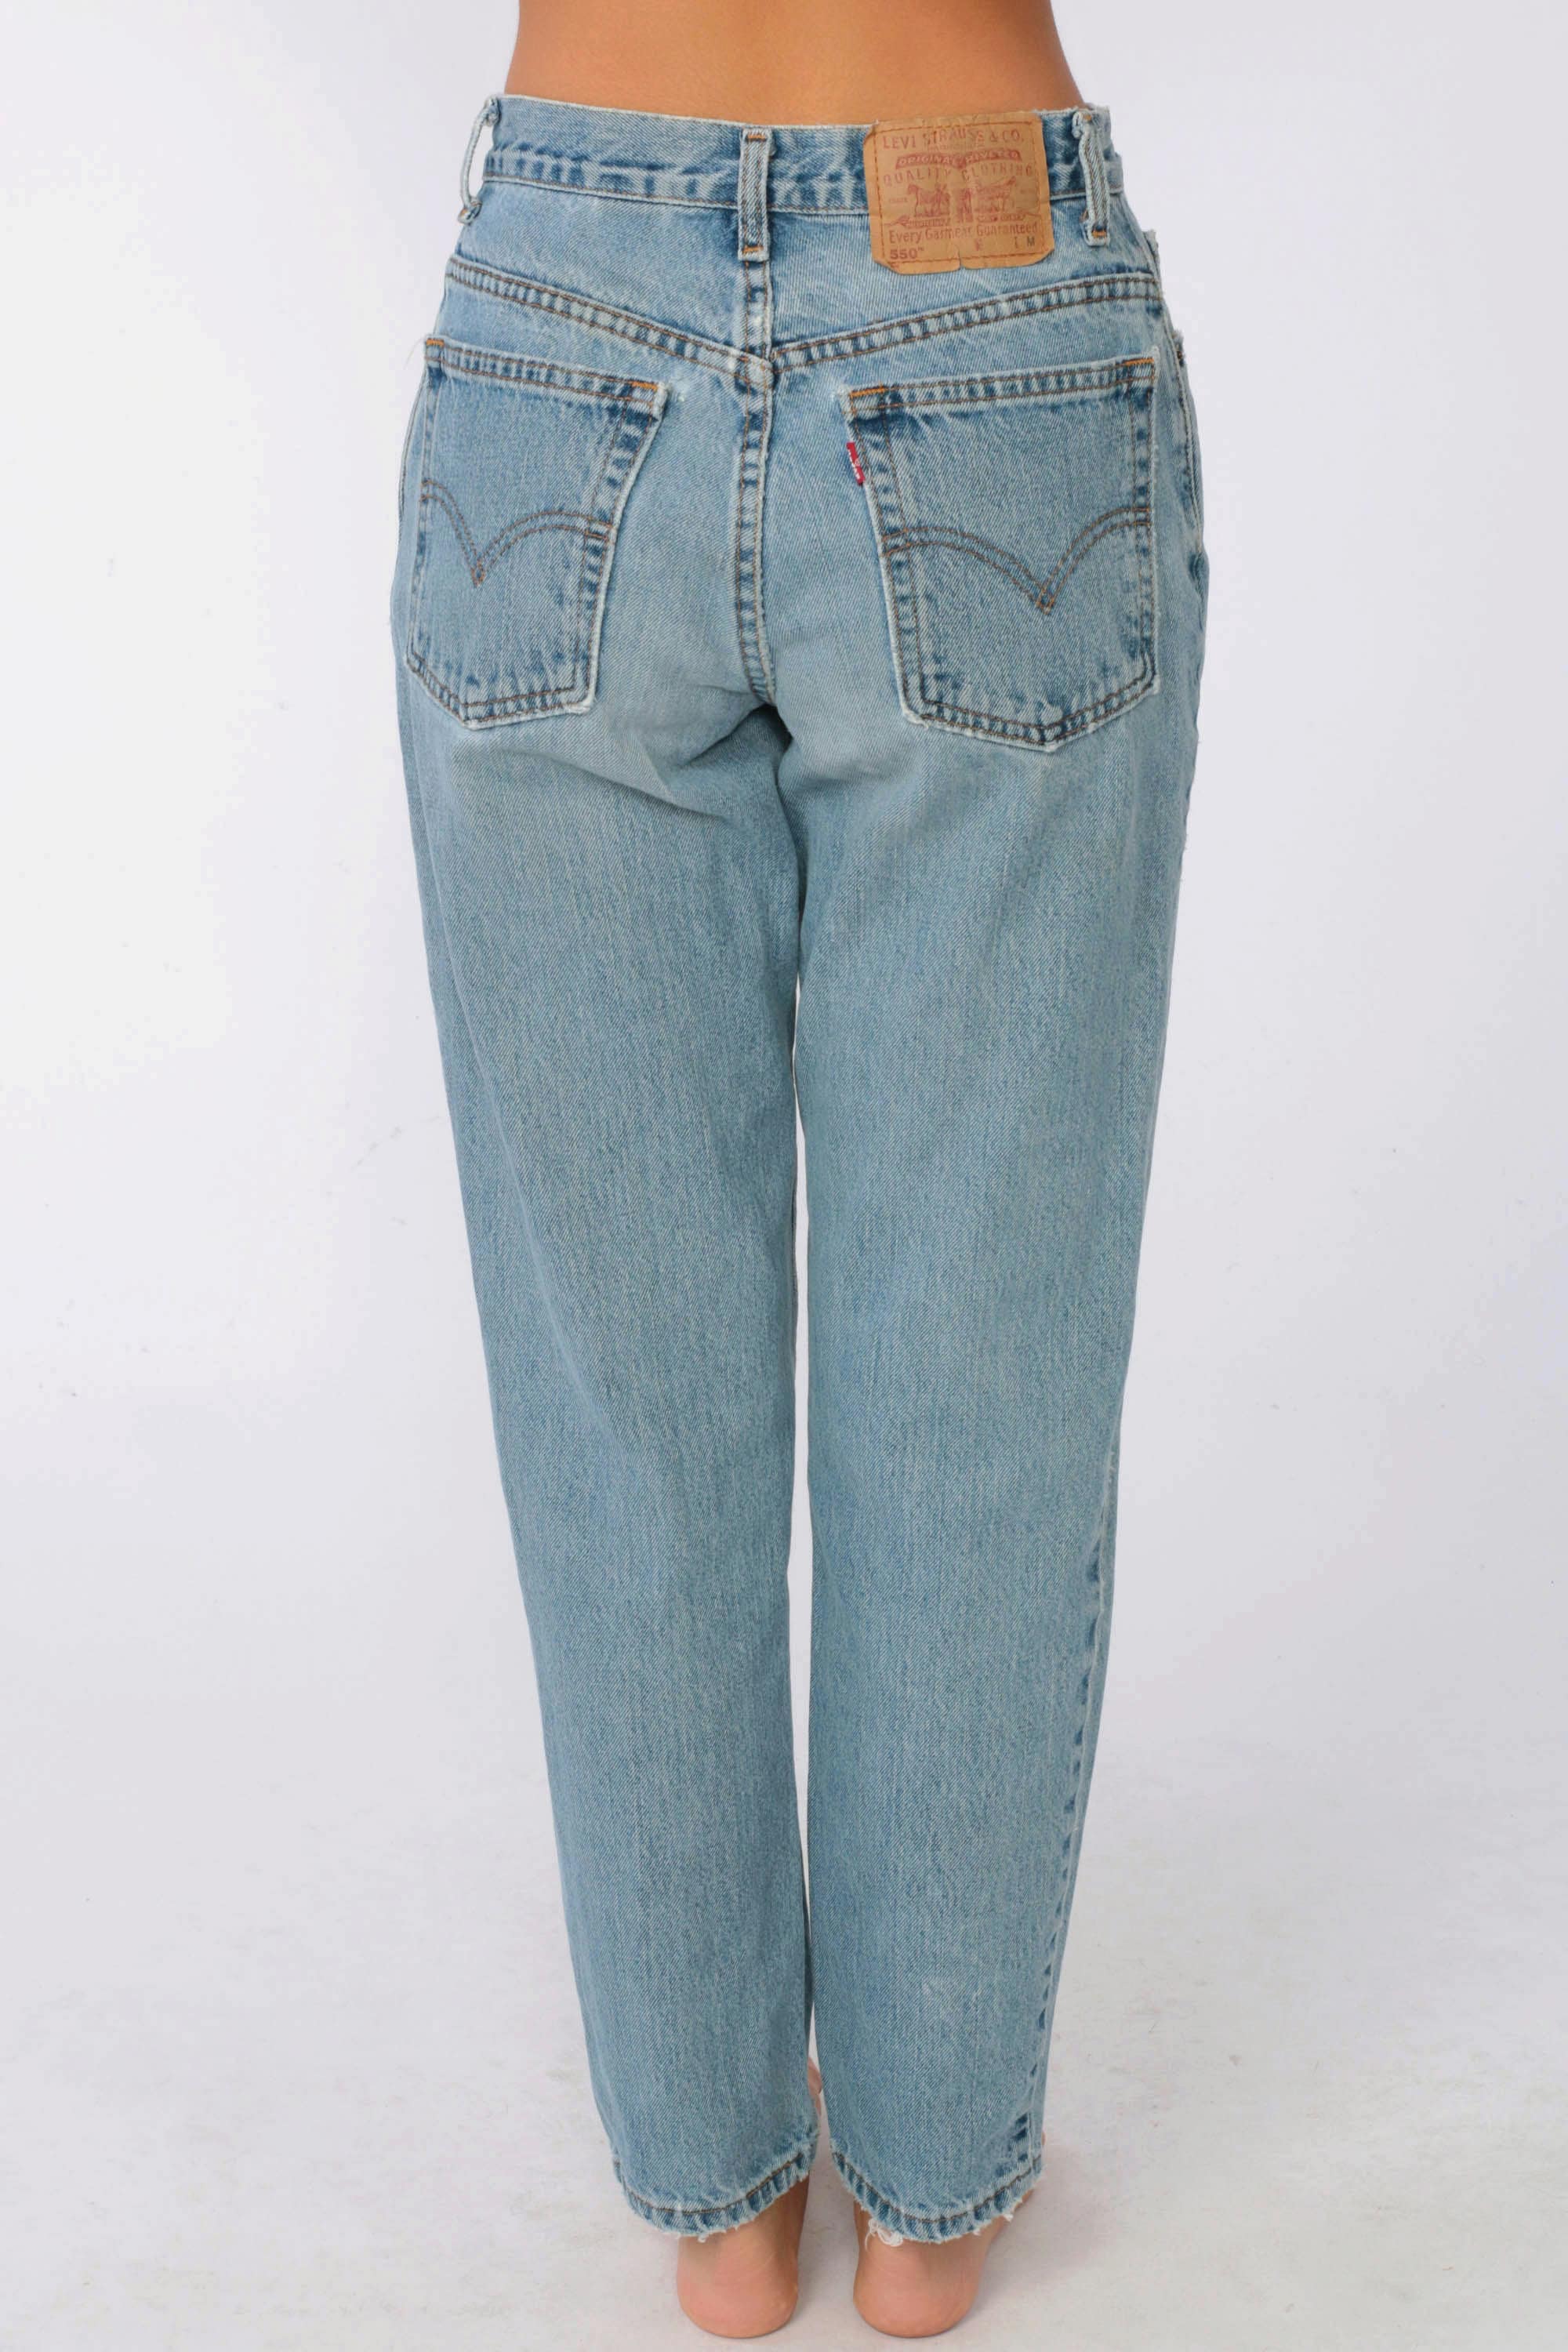 90s Levis Mom Jeans 27 X 31 Ripped Levis Jeans 1990s Blue Denim 550 Slim Jeans High Waist